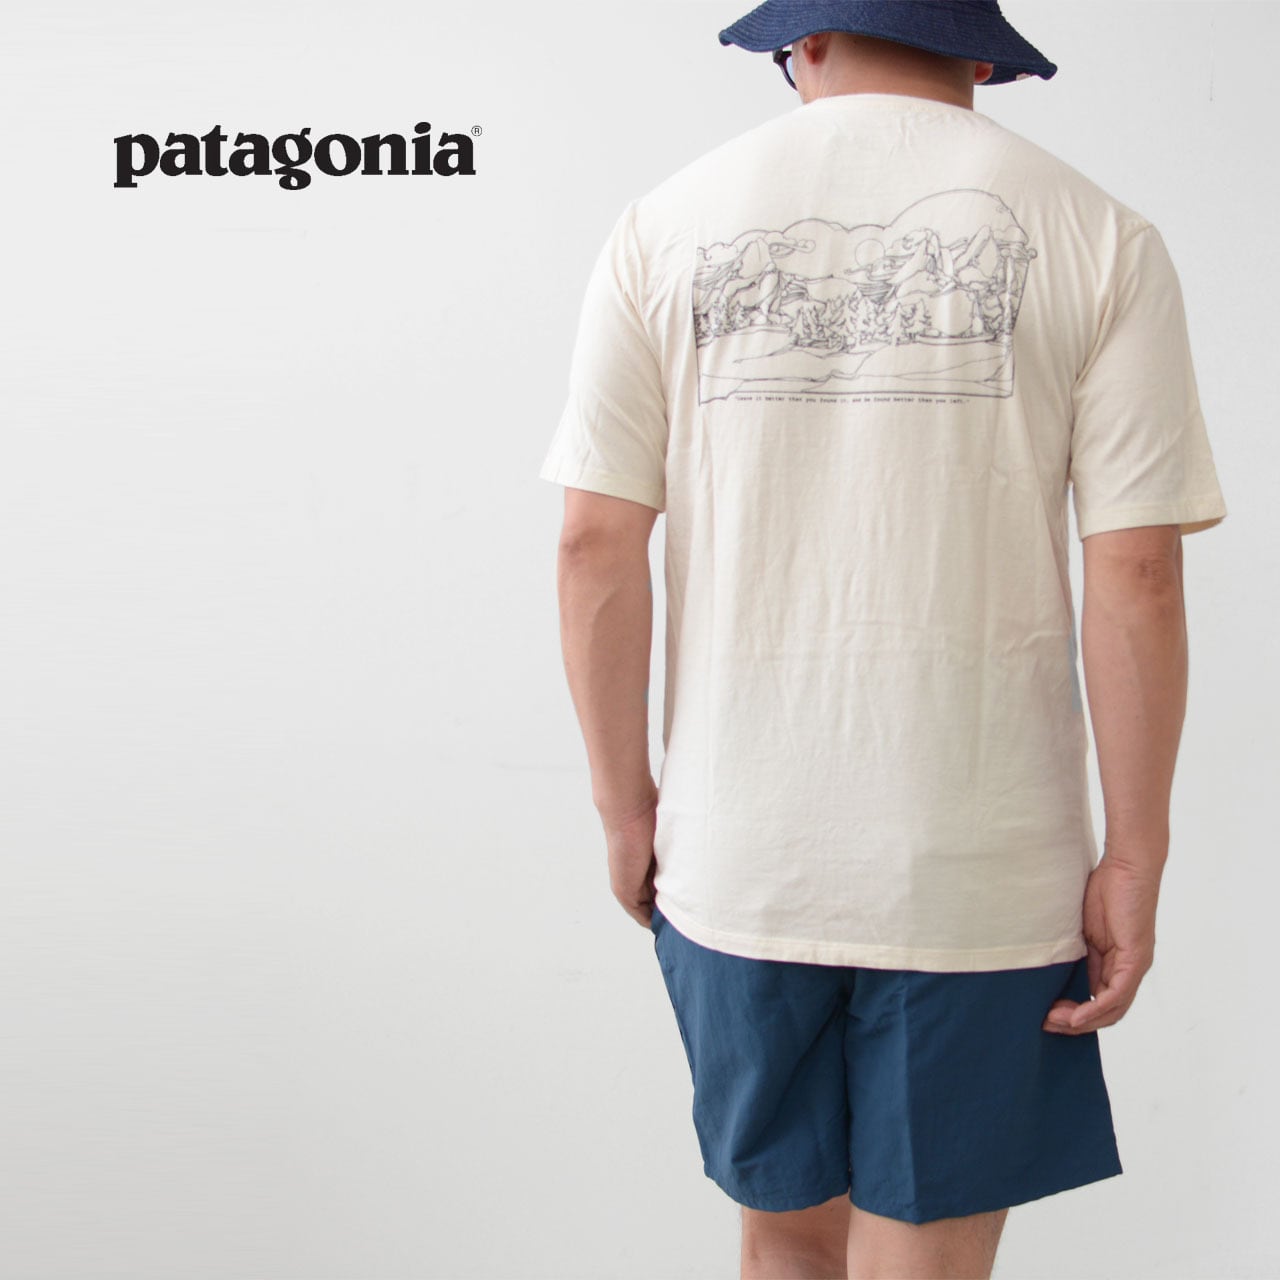 Patagonia [パタゴニア正規代理店] M's Lost And Found Organic Pocket T-Shirt [37672-23]  メンズ・ロスト・アンド・ファウンド・オーガニック・ポケット・Tシャツ・半袖Tシャツ・キャンプ・アウトドア・MEN'S LADY'S  [2023SS] refalt online store